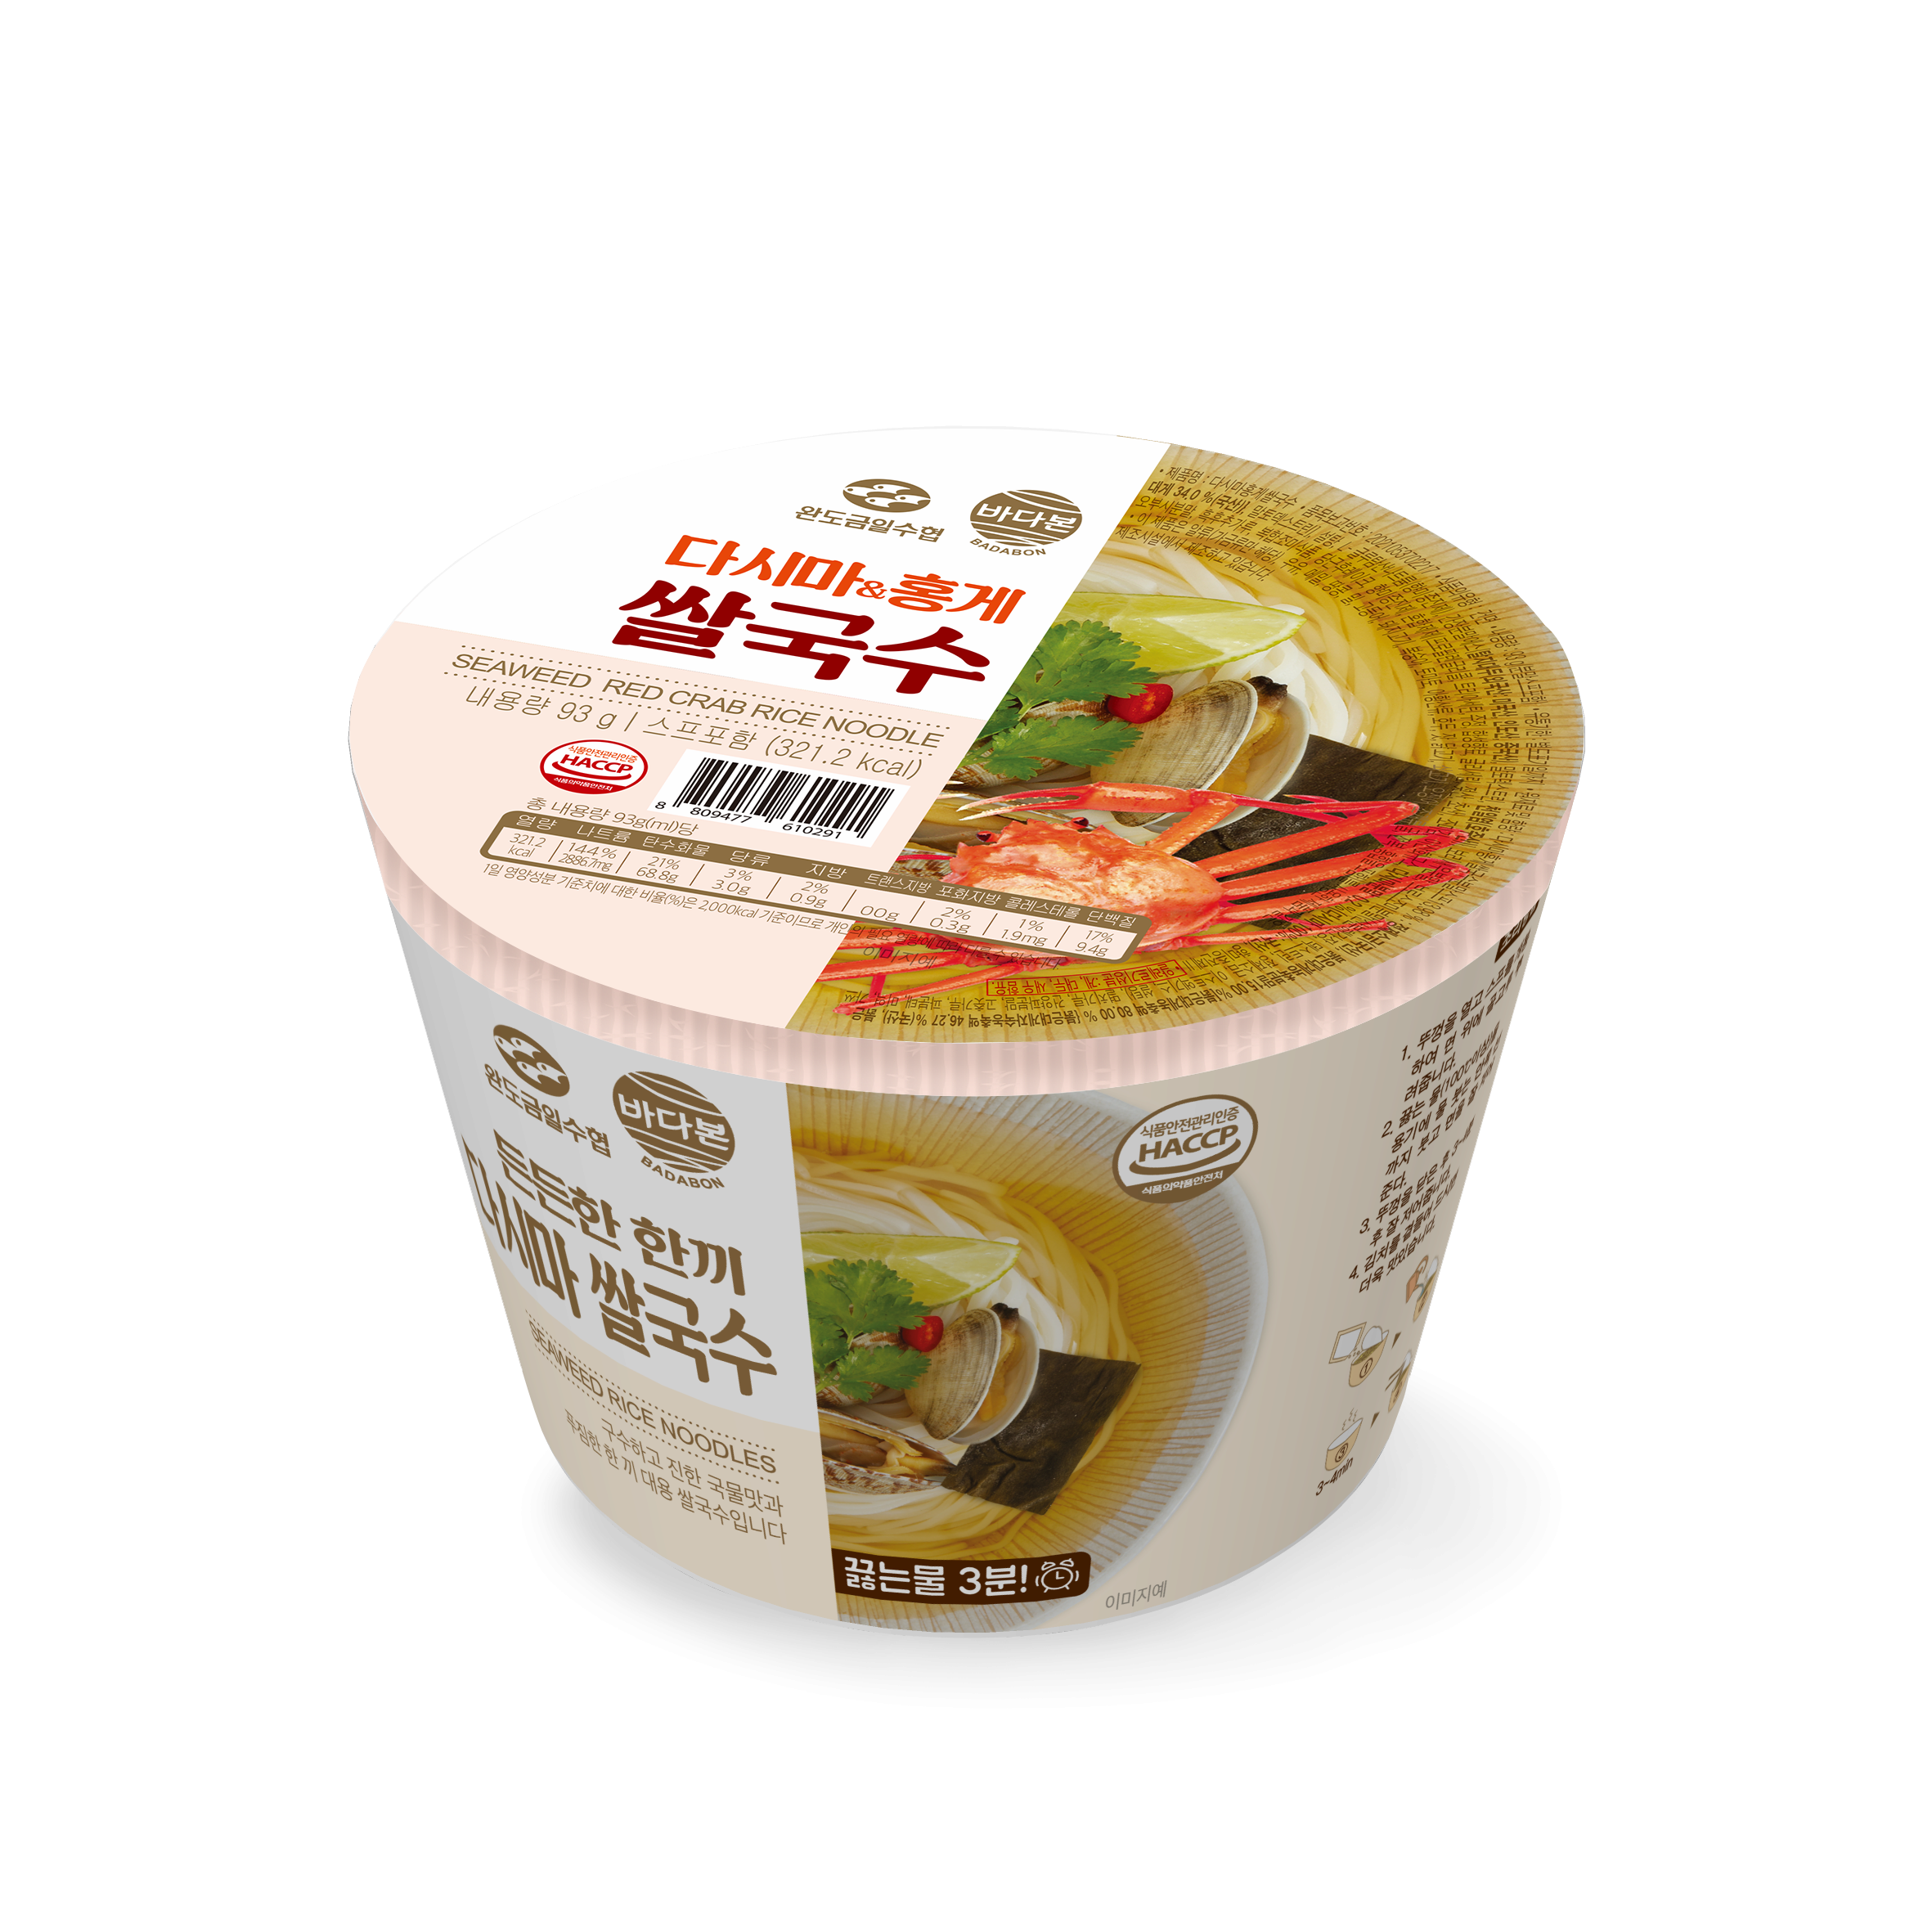 Seaweed crab rice noodle